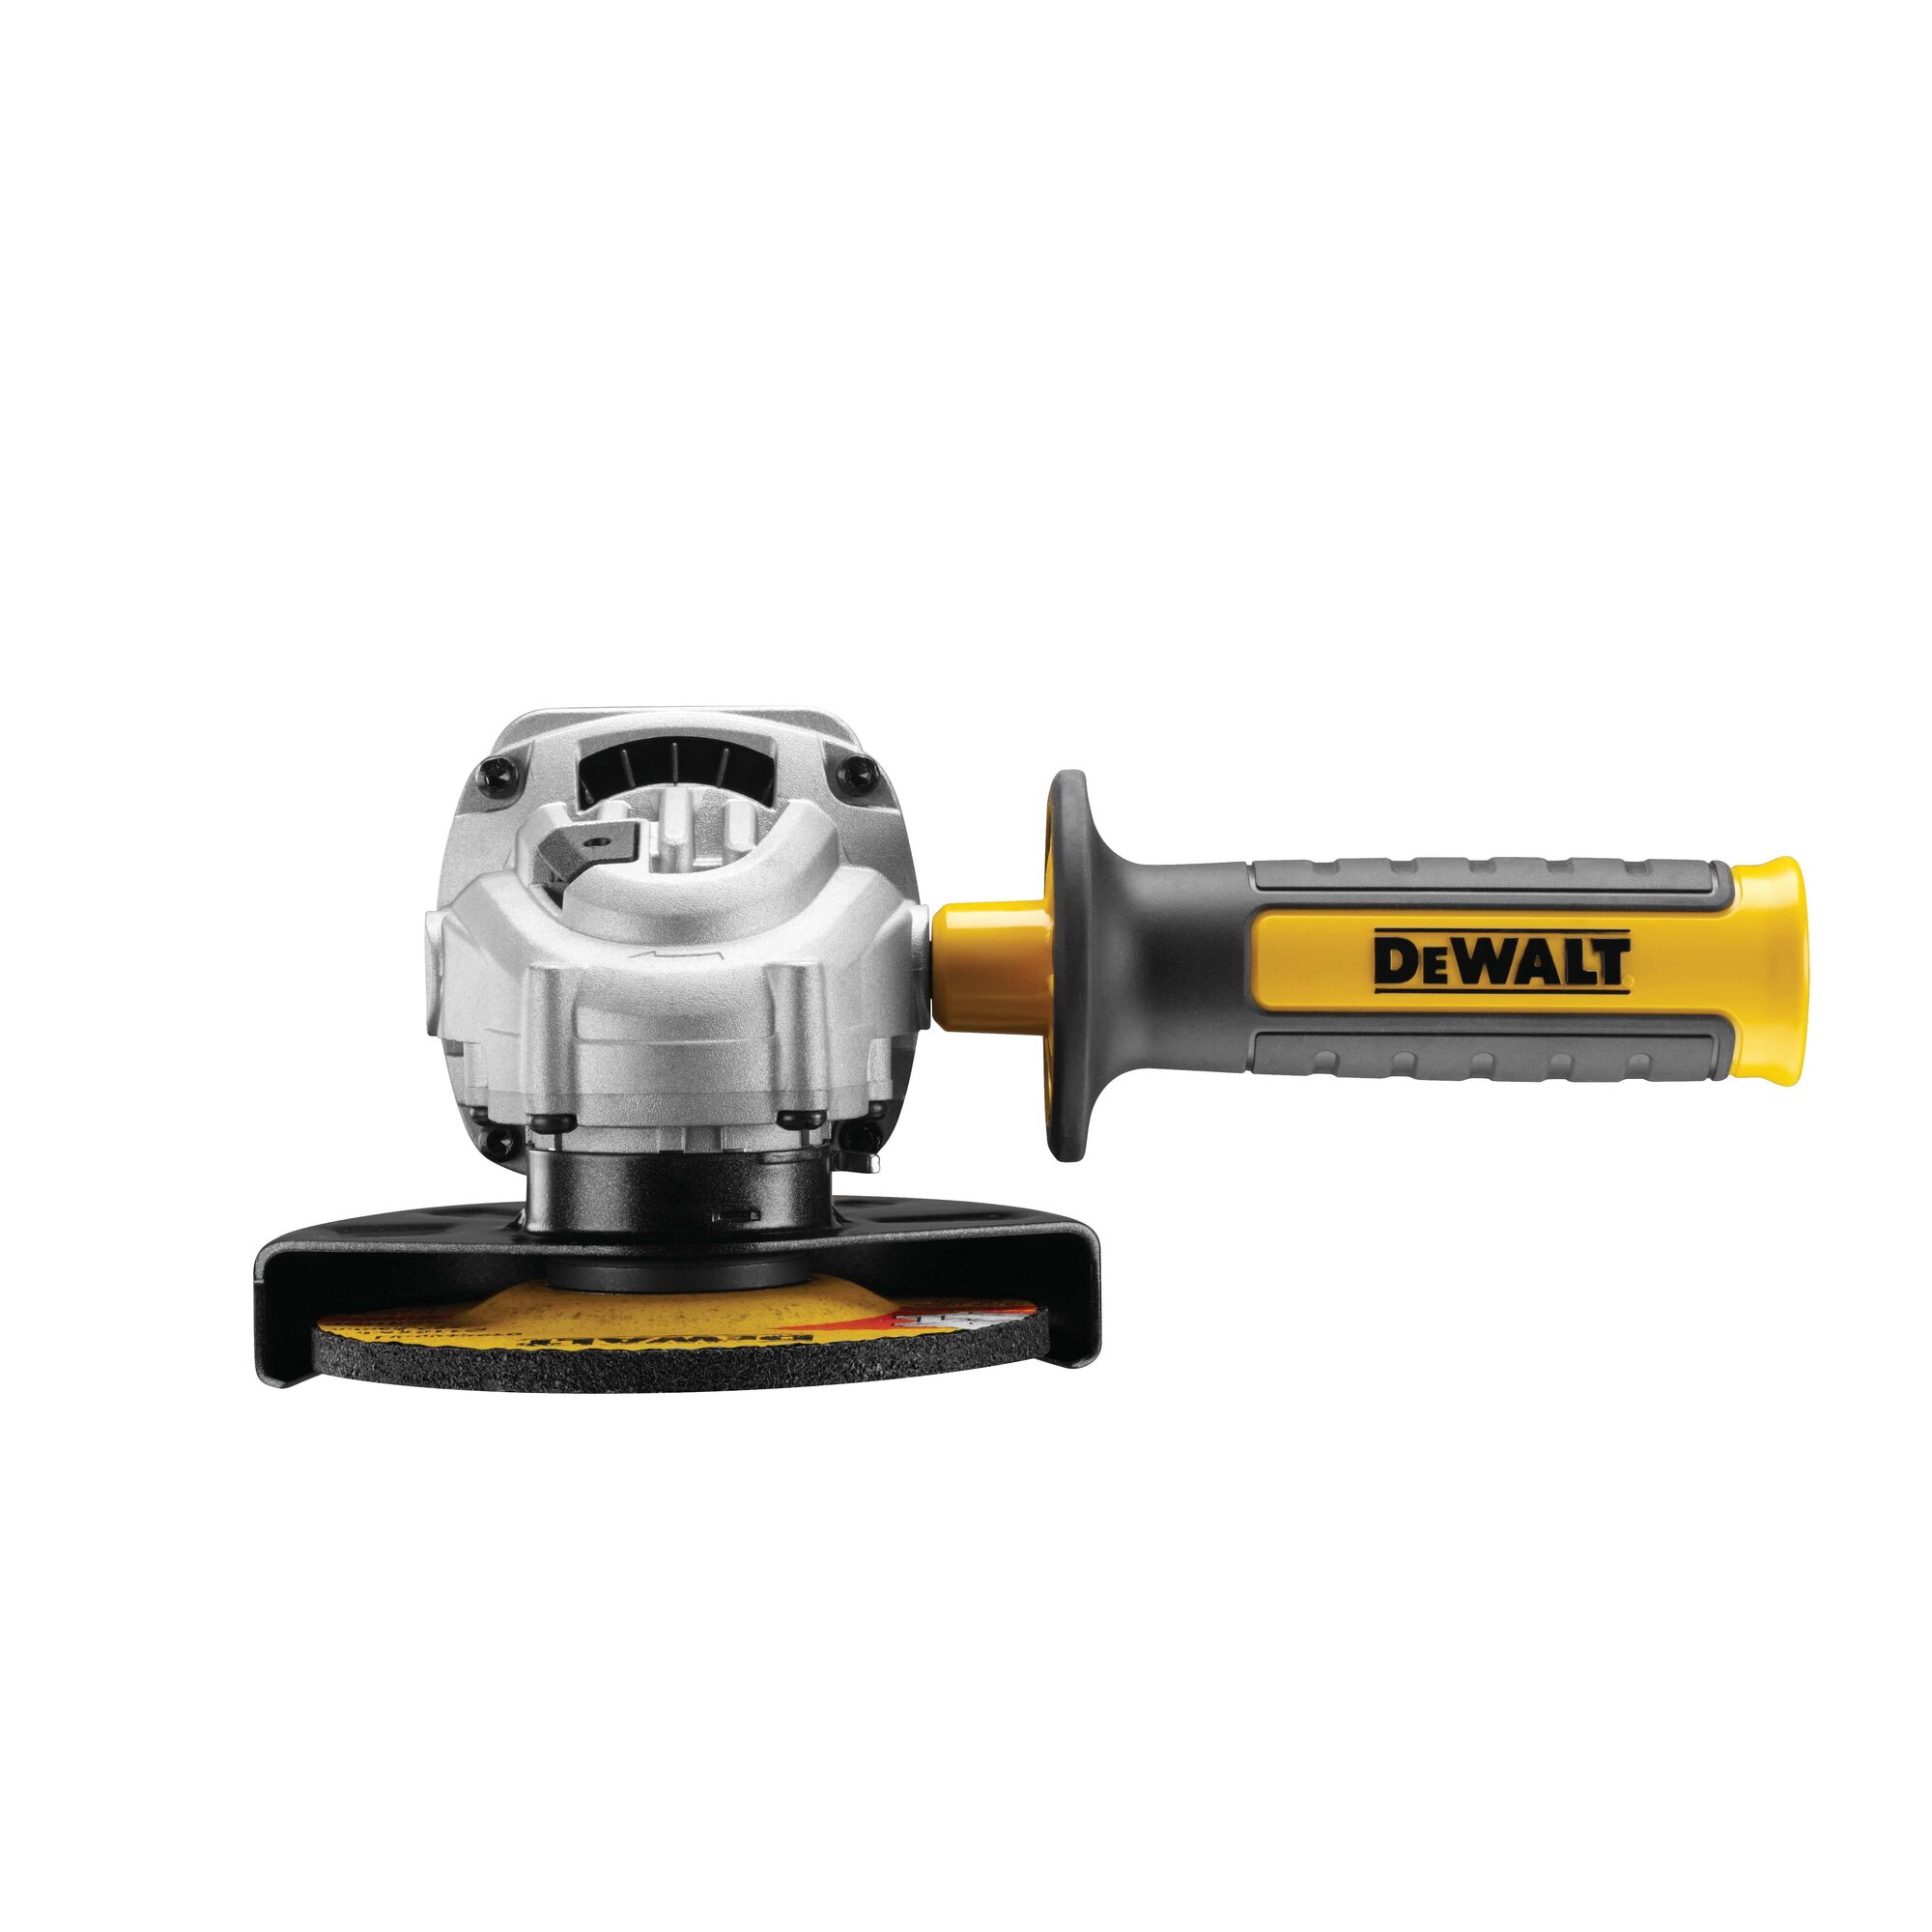 240 V, 1010 W Dewalt DWE4206 Mini Angel Grinder with No Volt Release Switch 